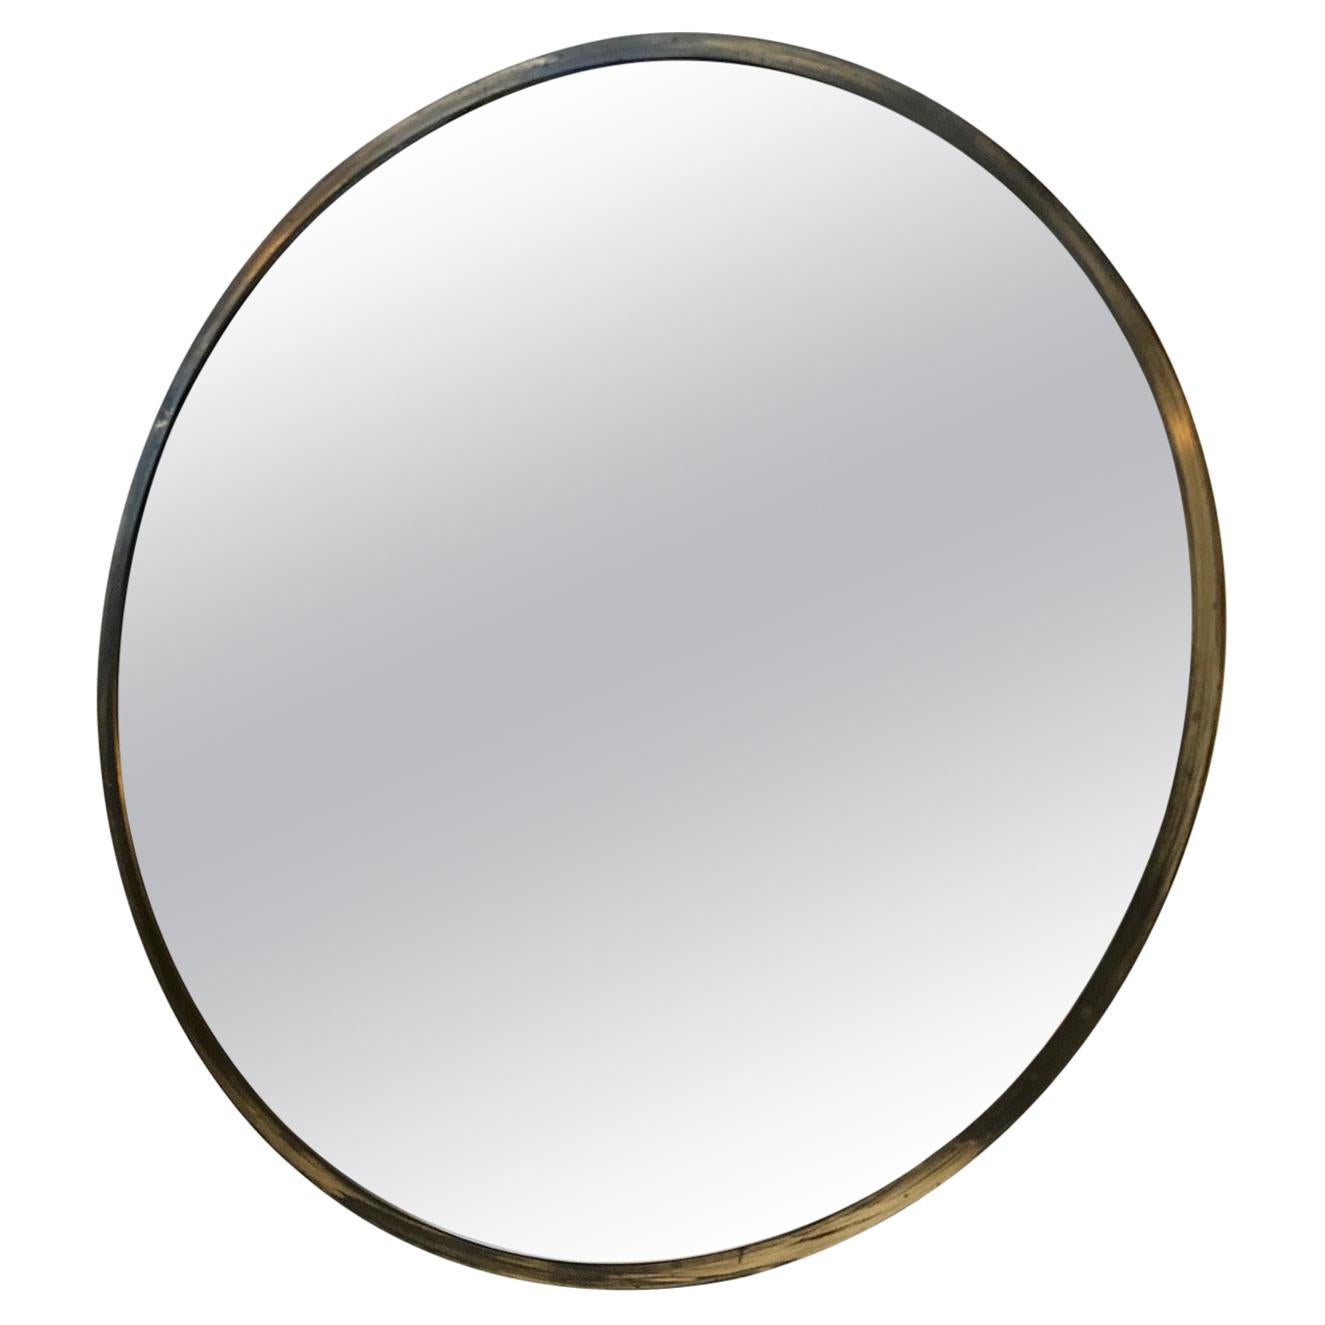 Circular Italian Mirror in Patinated Brass, 1950s